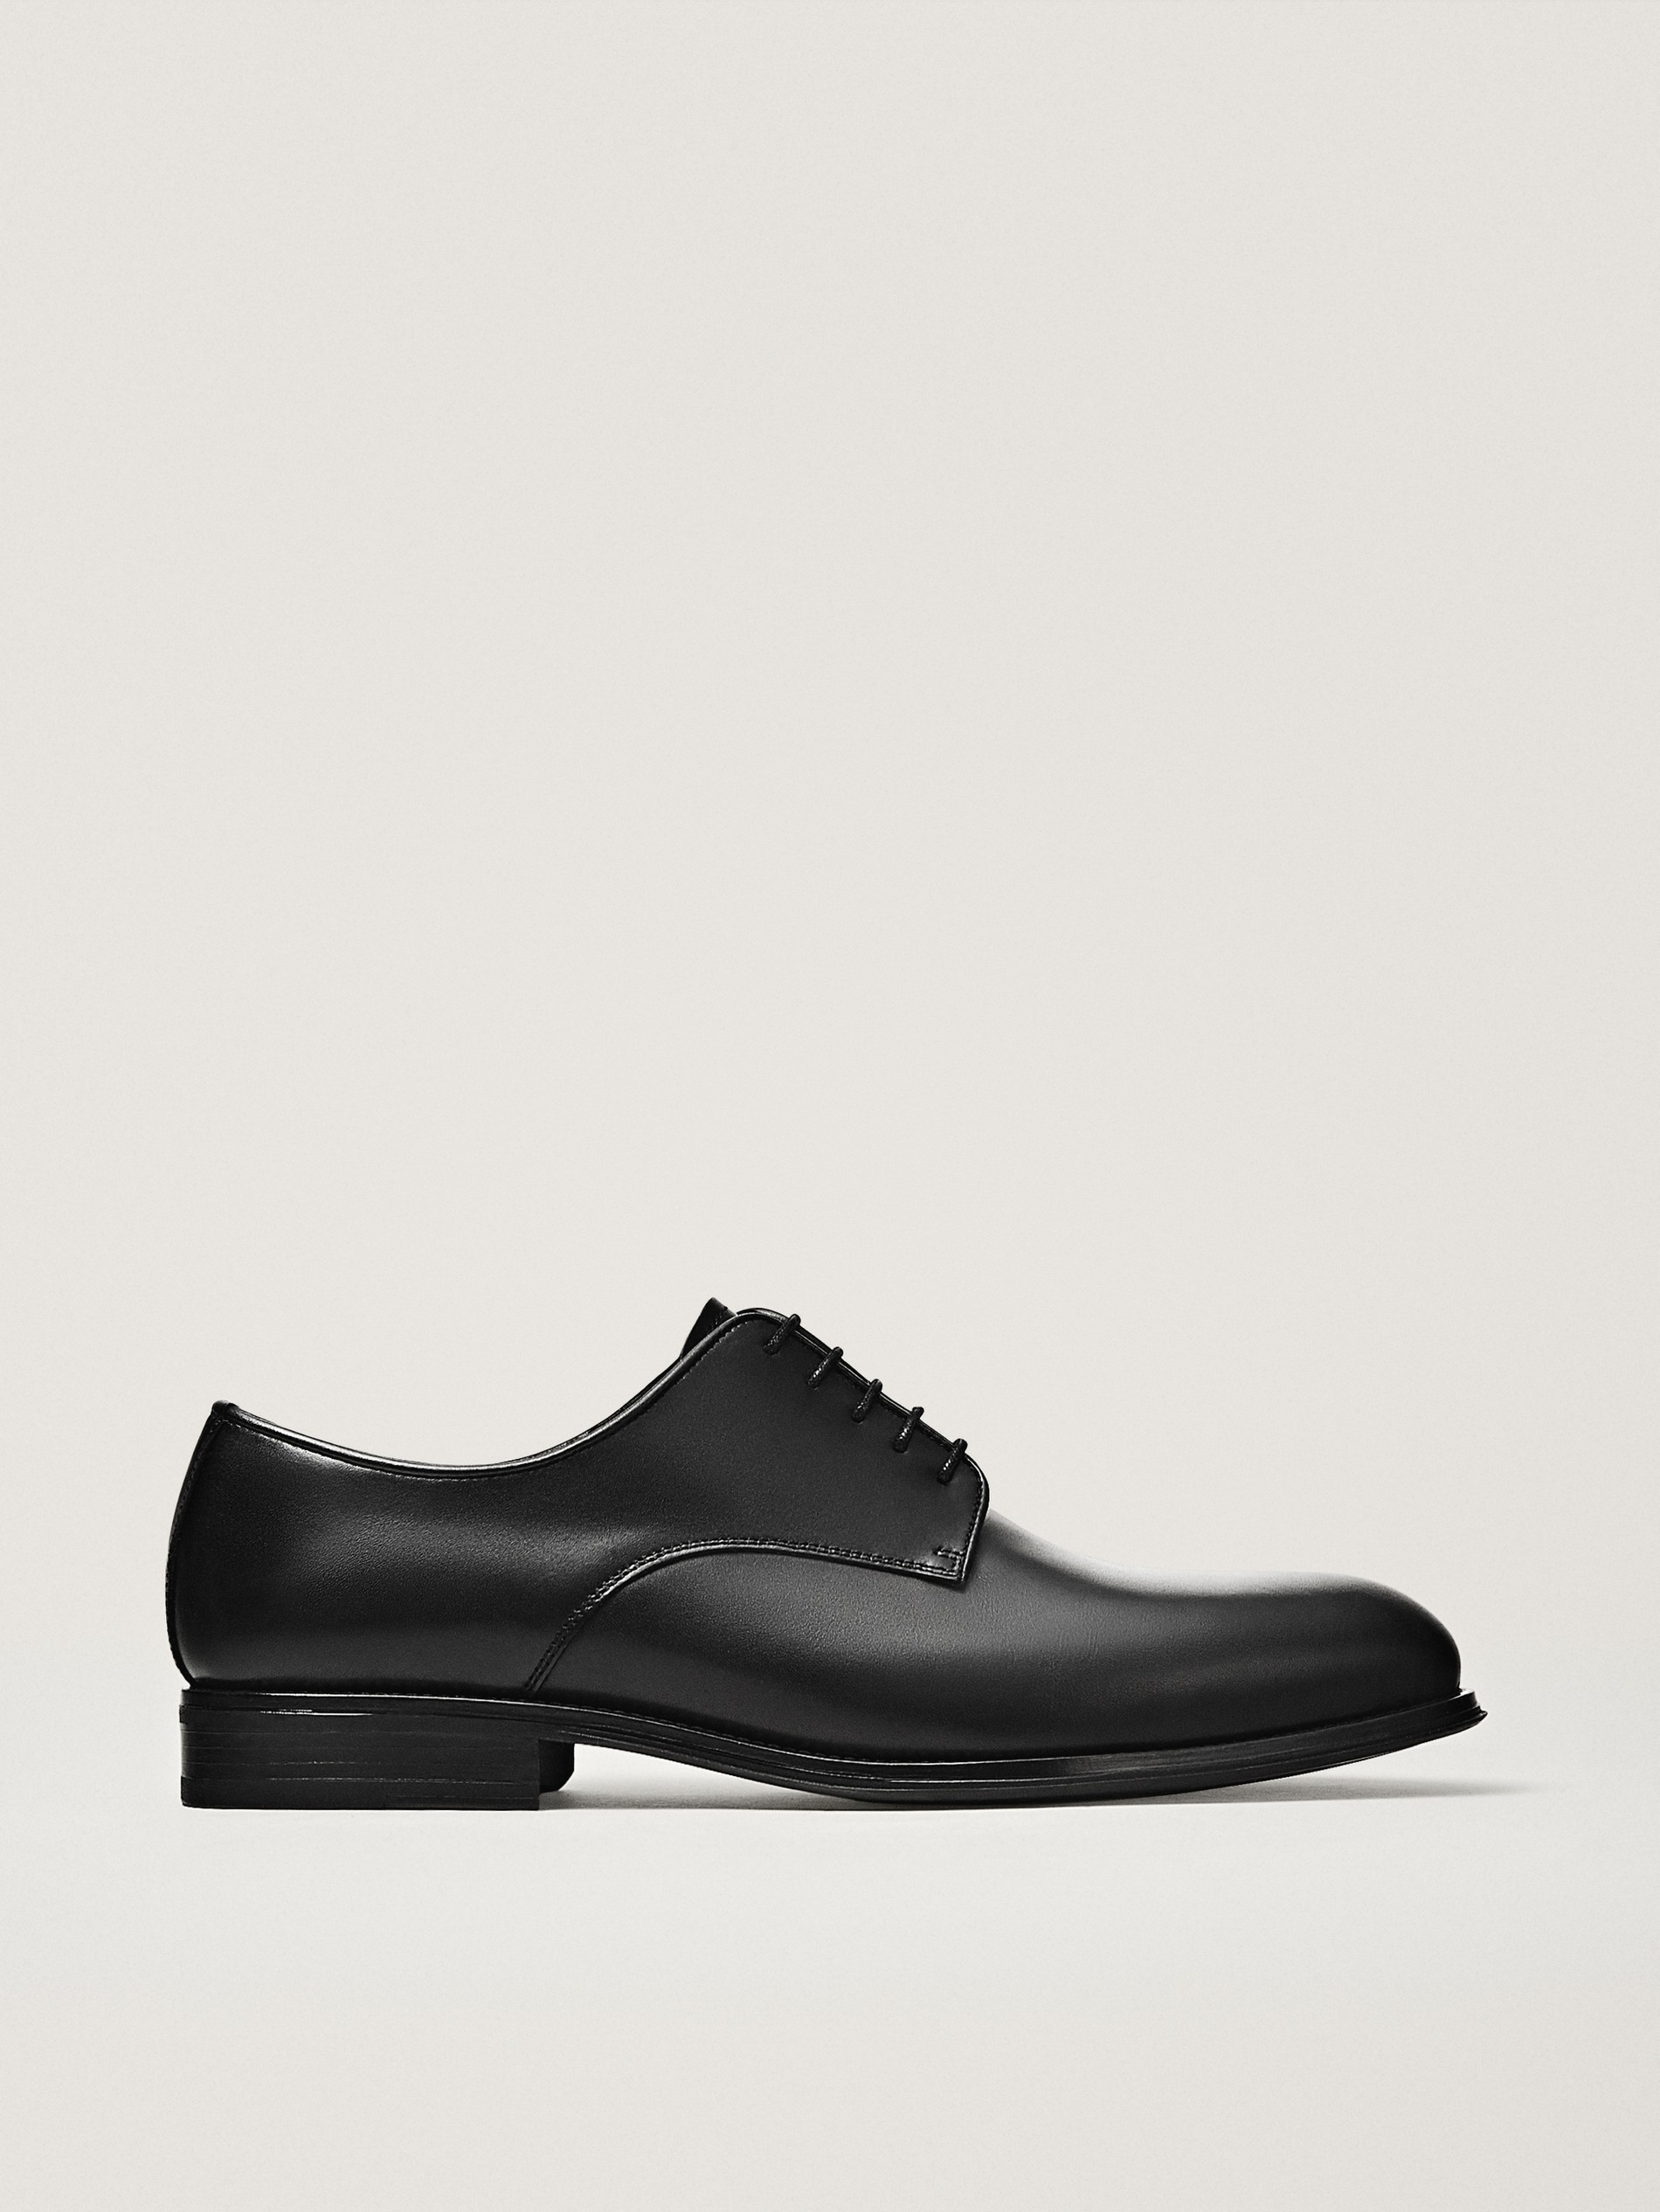 mens black derby shoes leather